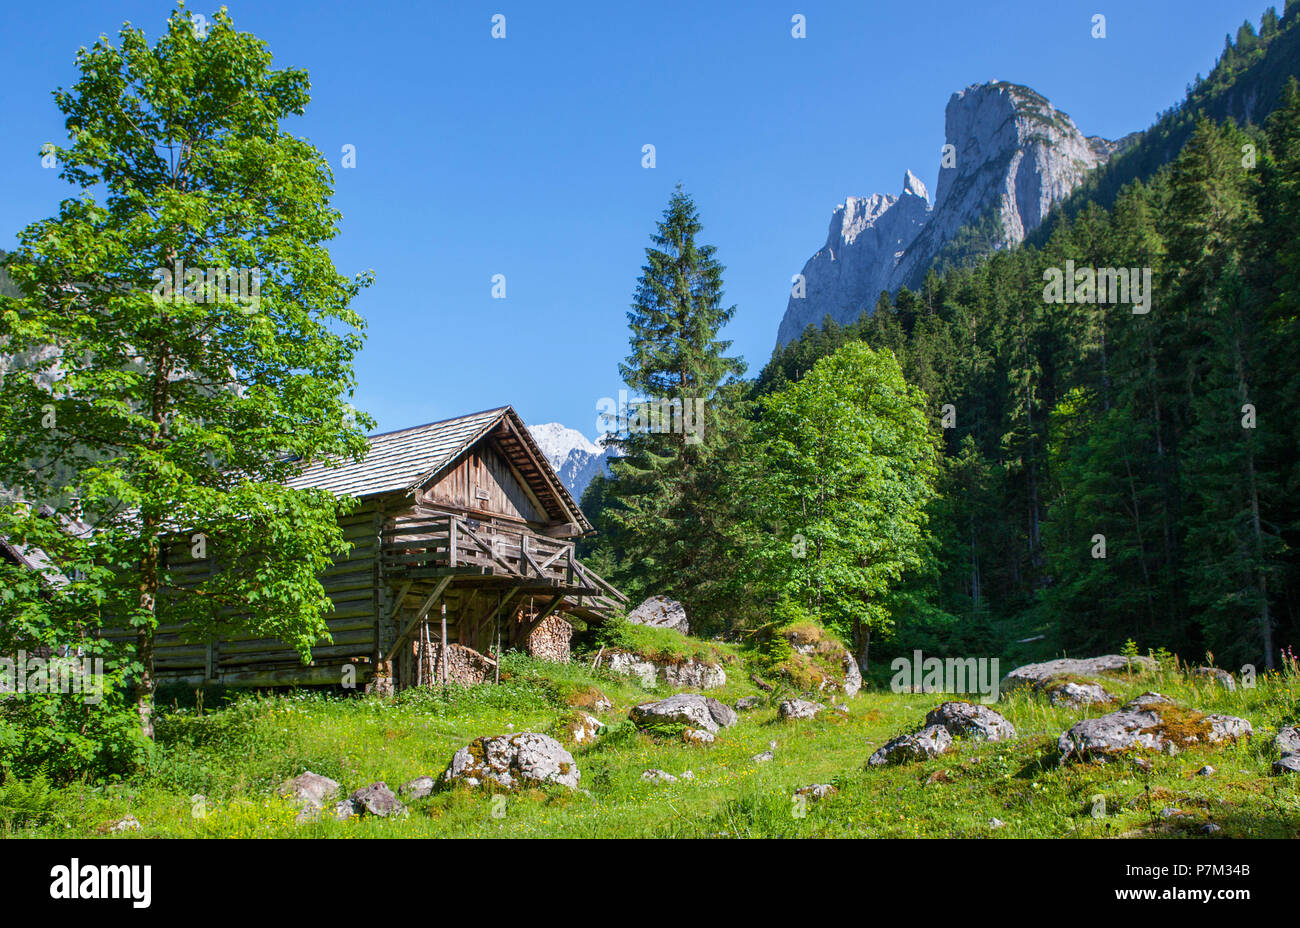 Austria, Austria superiore, regione del Salzkammergut, Gosau, Dachstein massiccio Dachstein, capanna in legno, Foto Stock